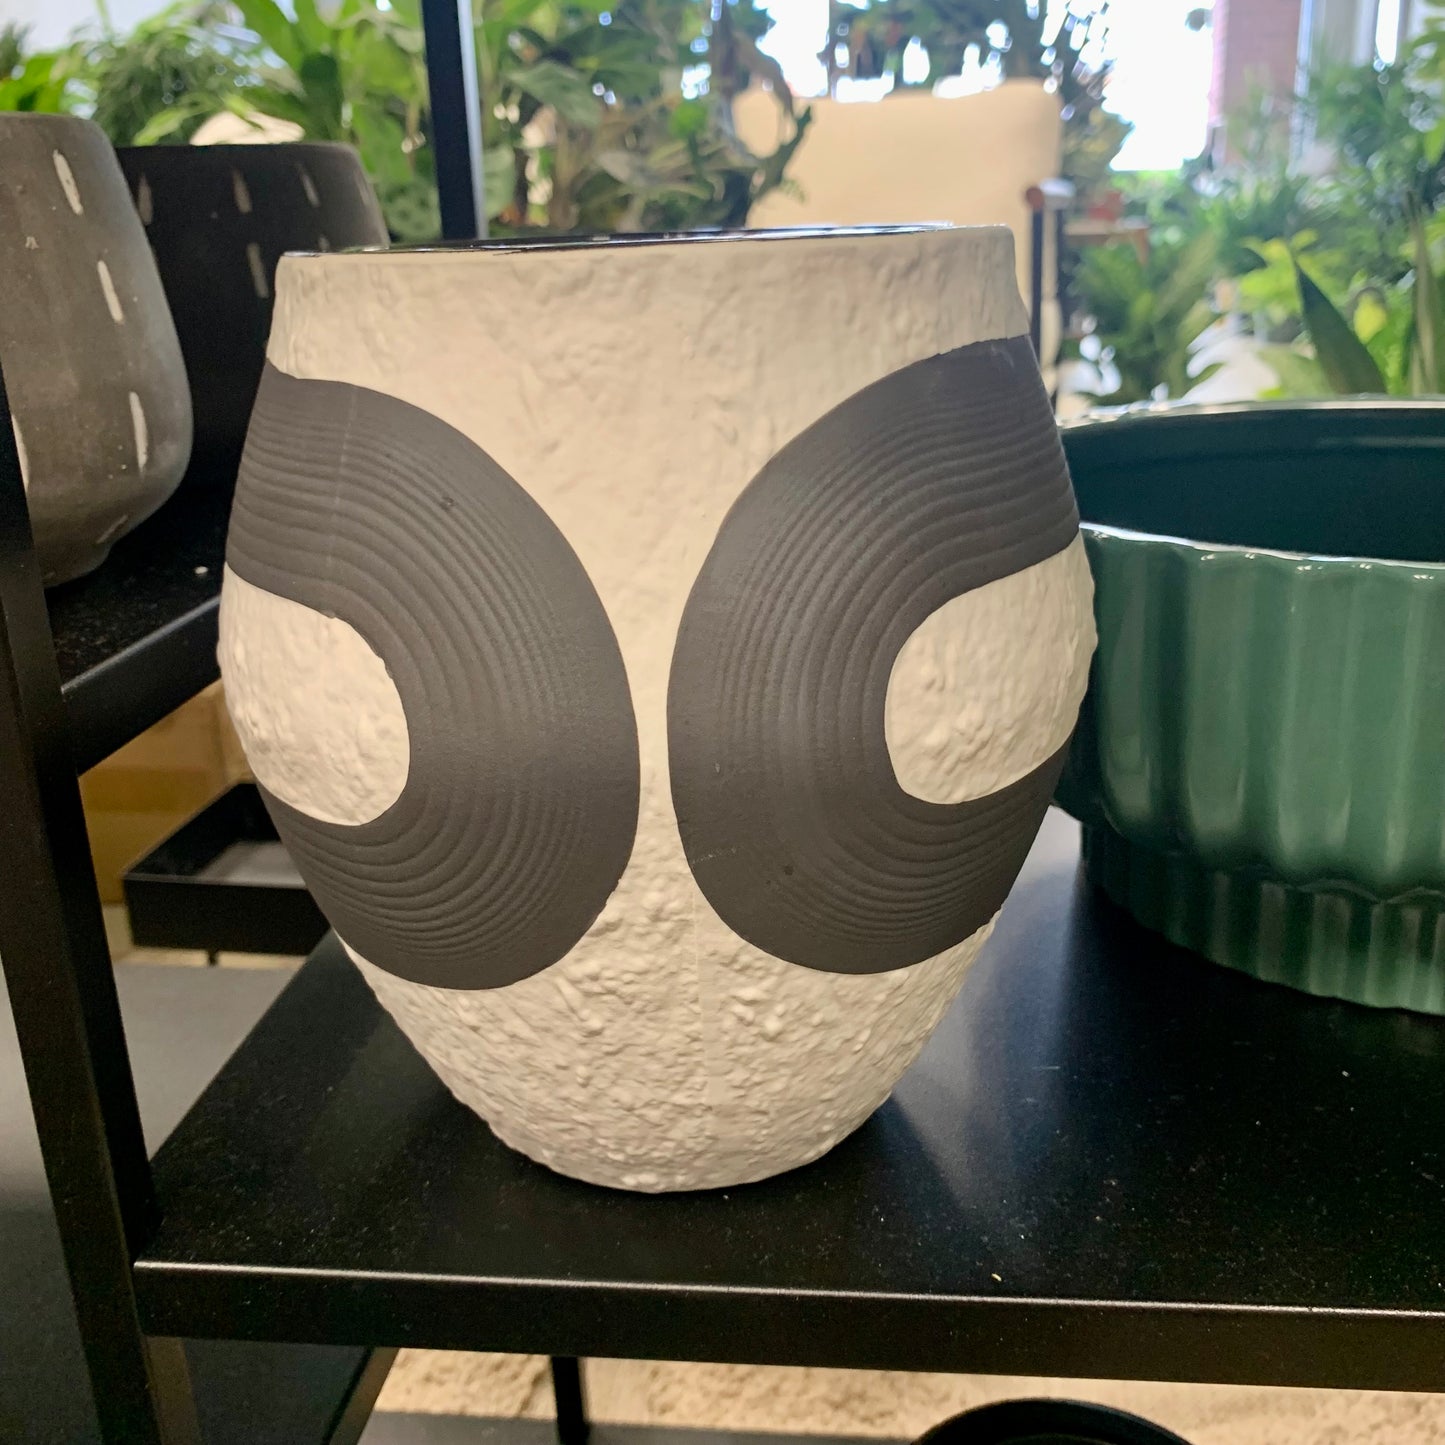 Black + White Stoneware Vase